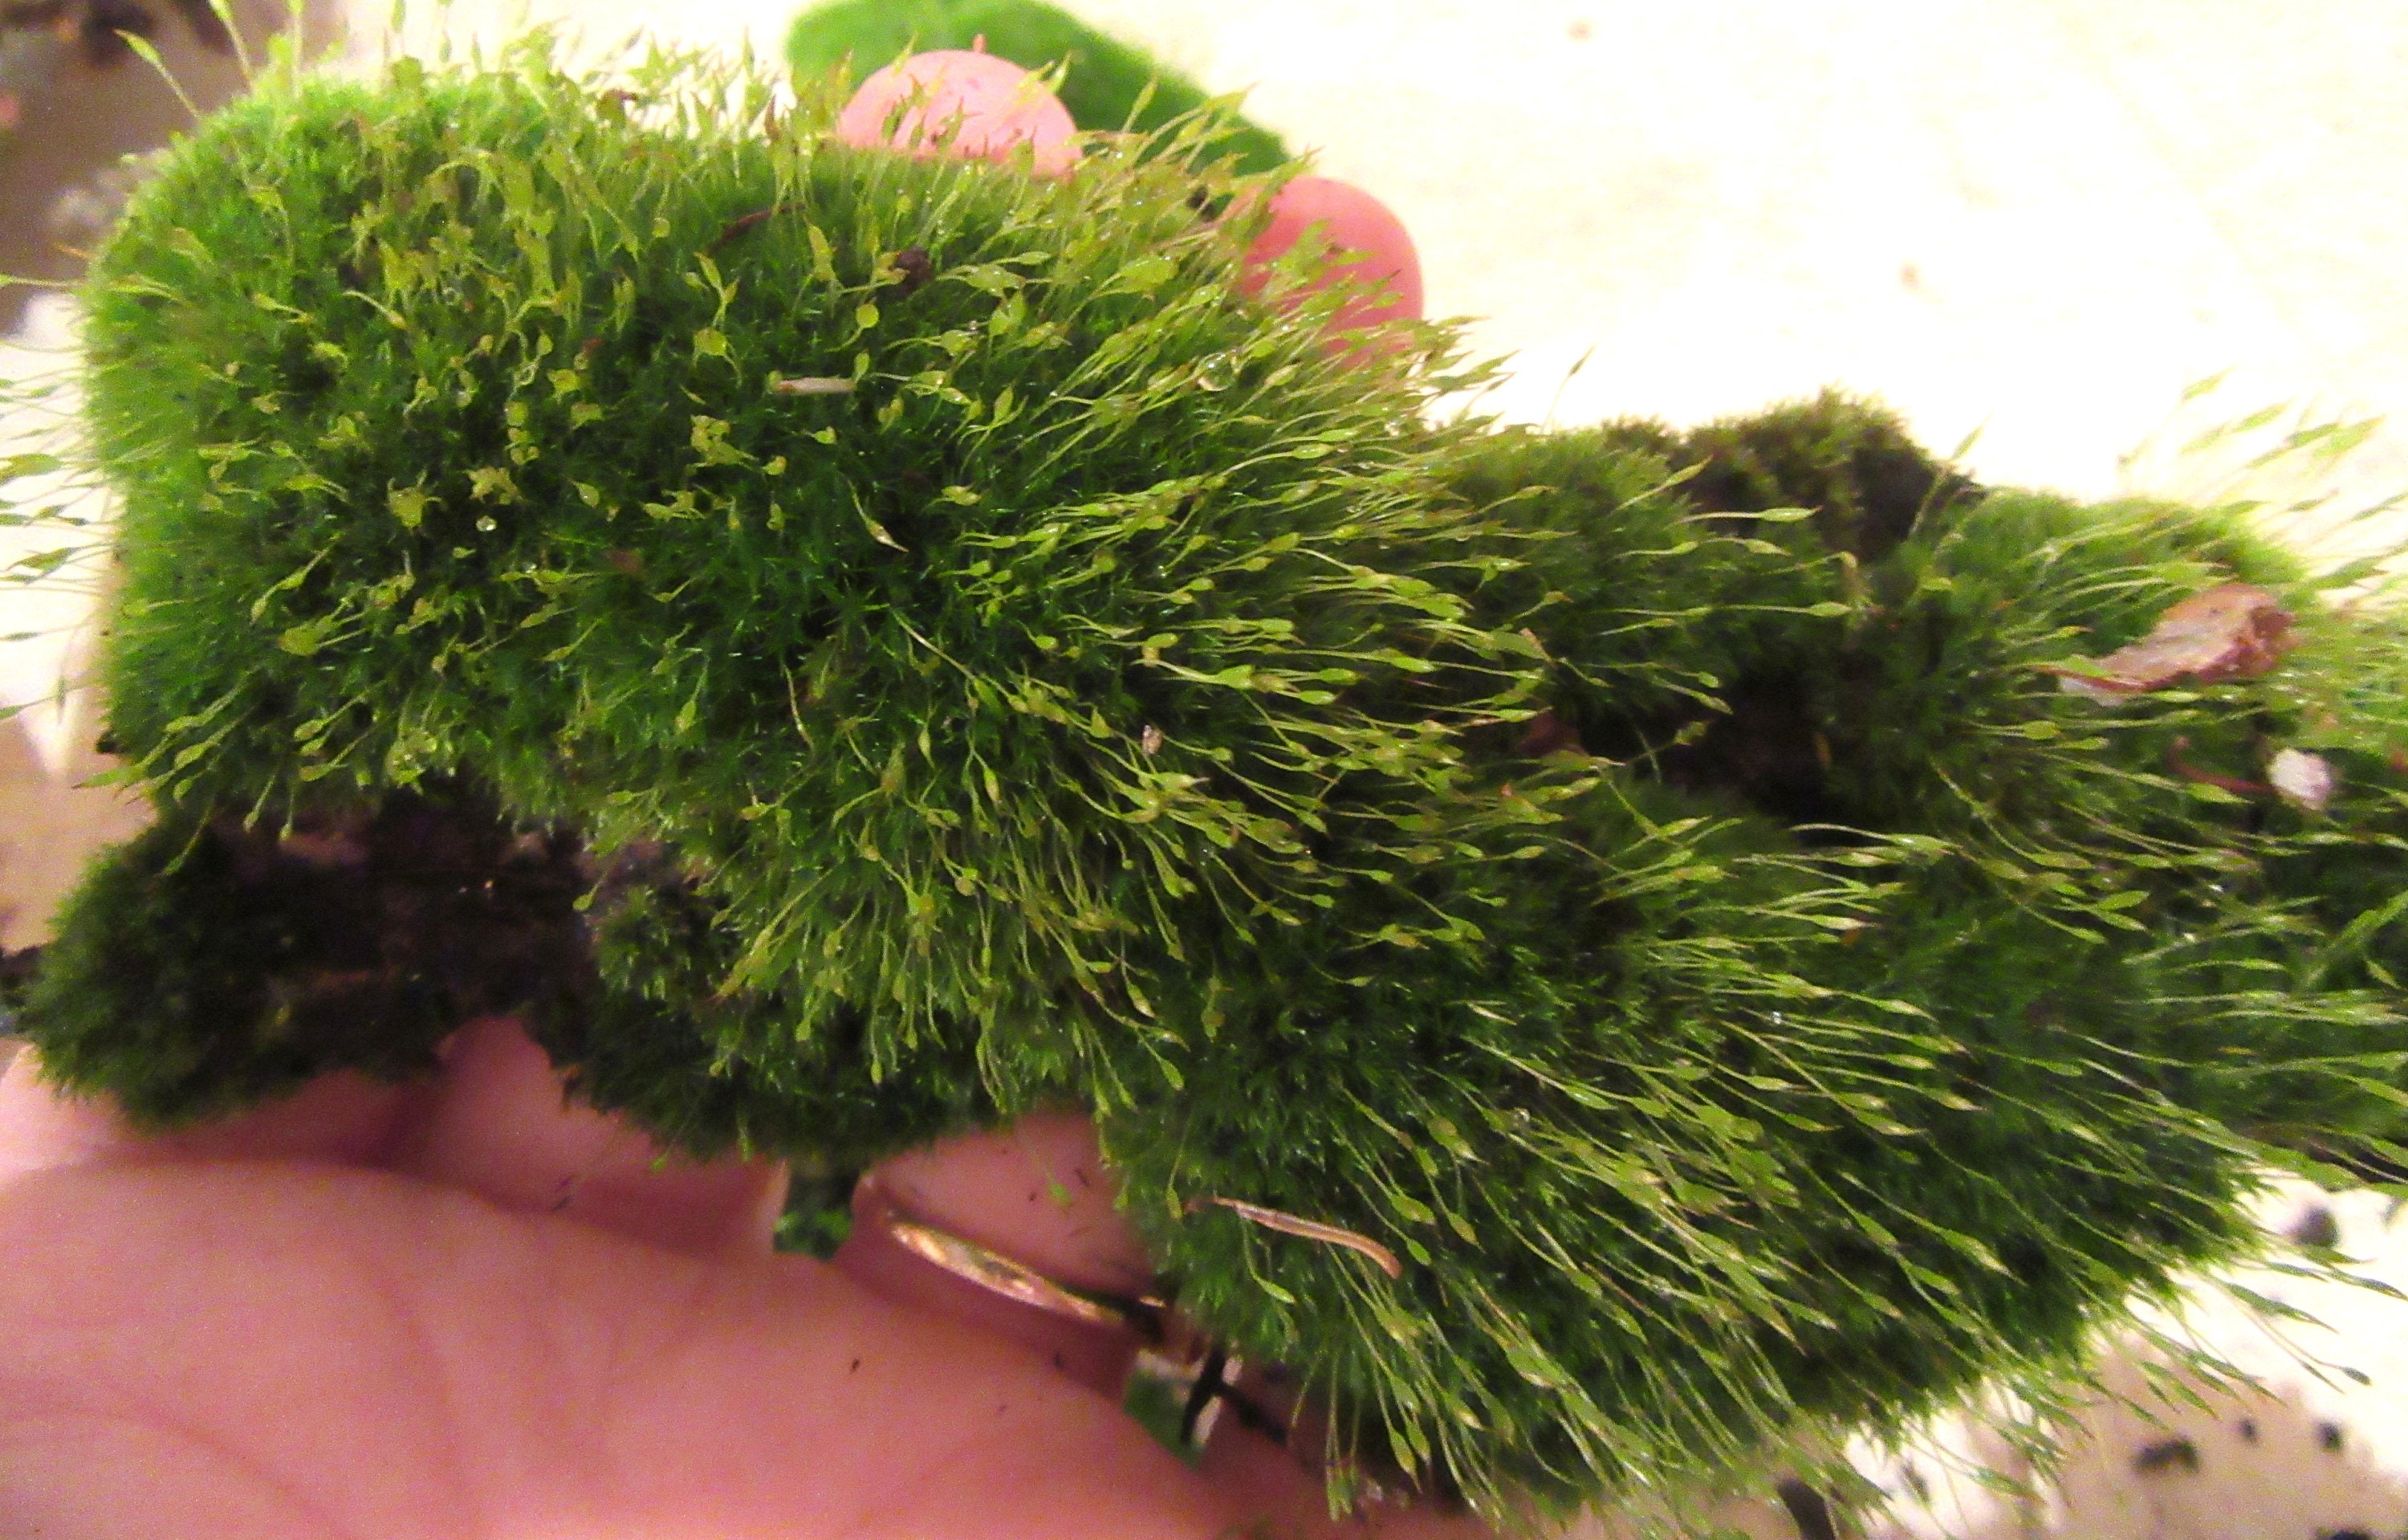 Assorted smaller mosses, 1 Quart bag Of Live Bun Moss, Immature Mood Moss, Cushion  Moss for Terrariums!